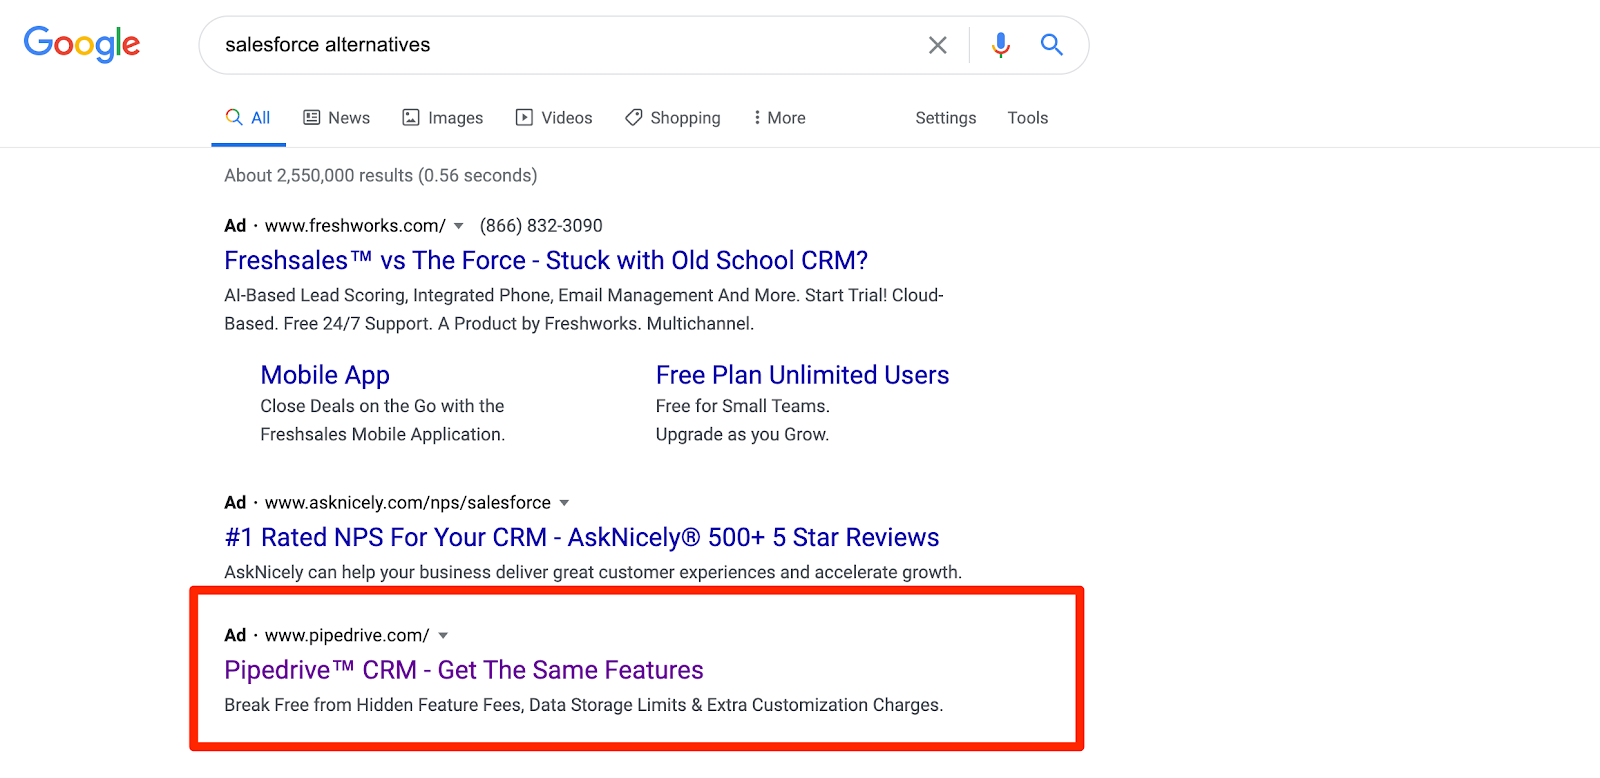 salesforce alternatives google search